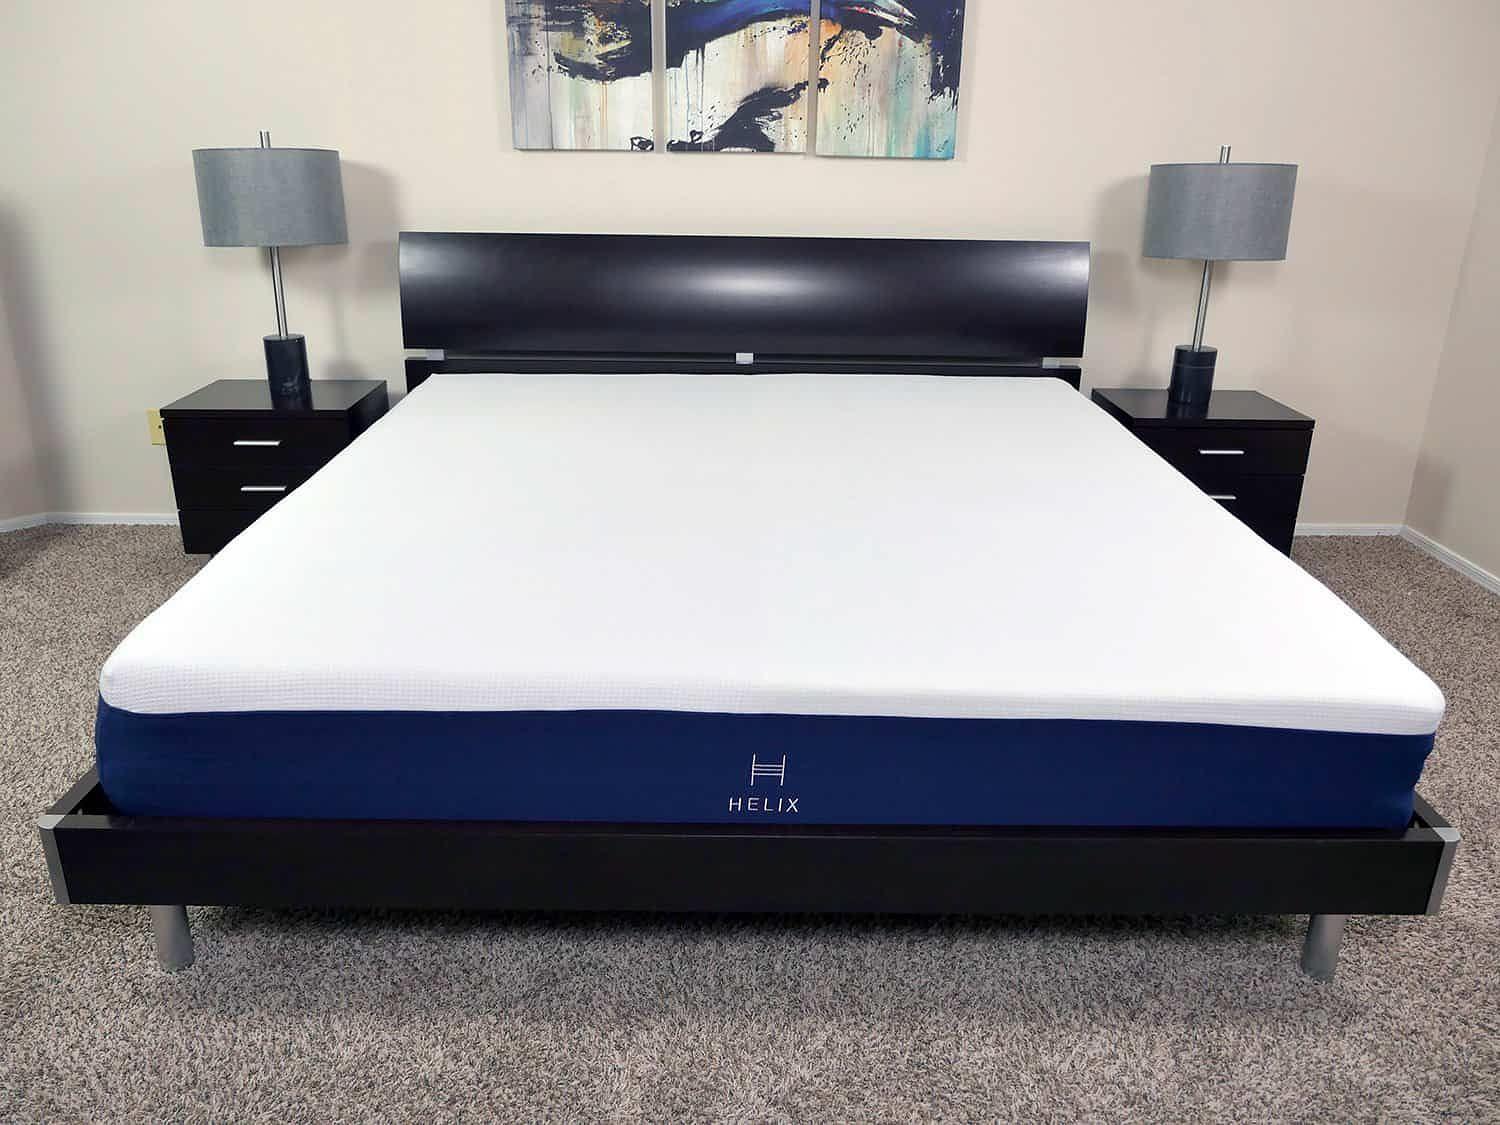 Helix Dynamic foam customizable mattress